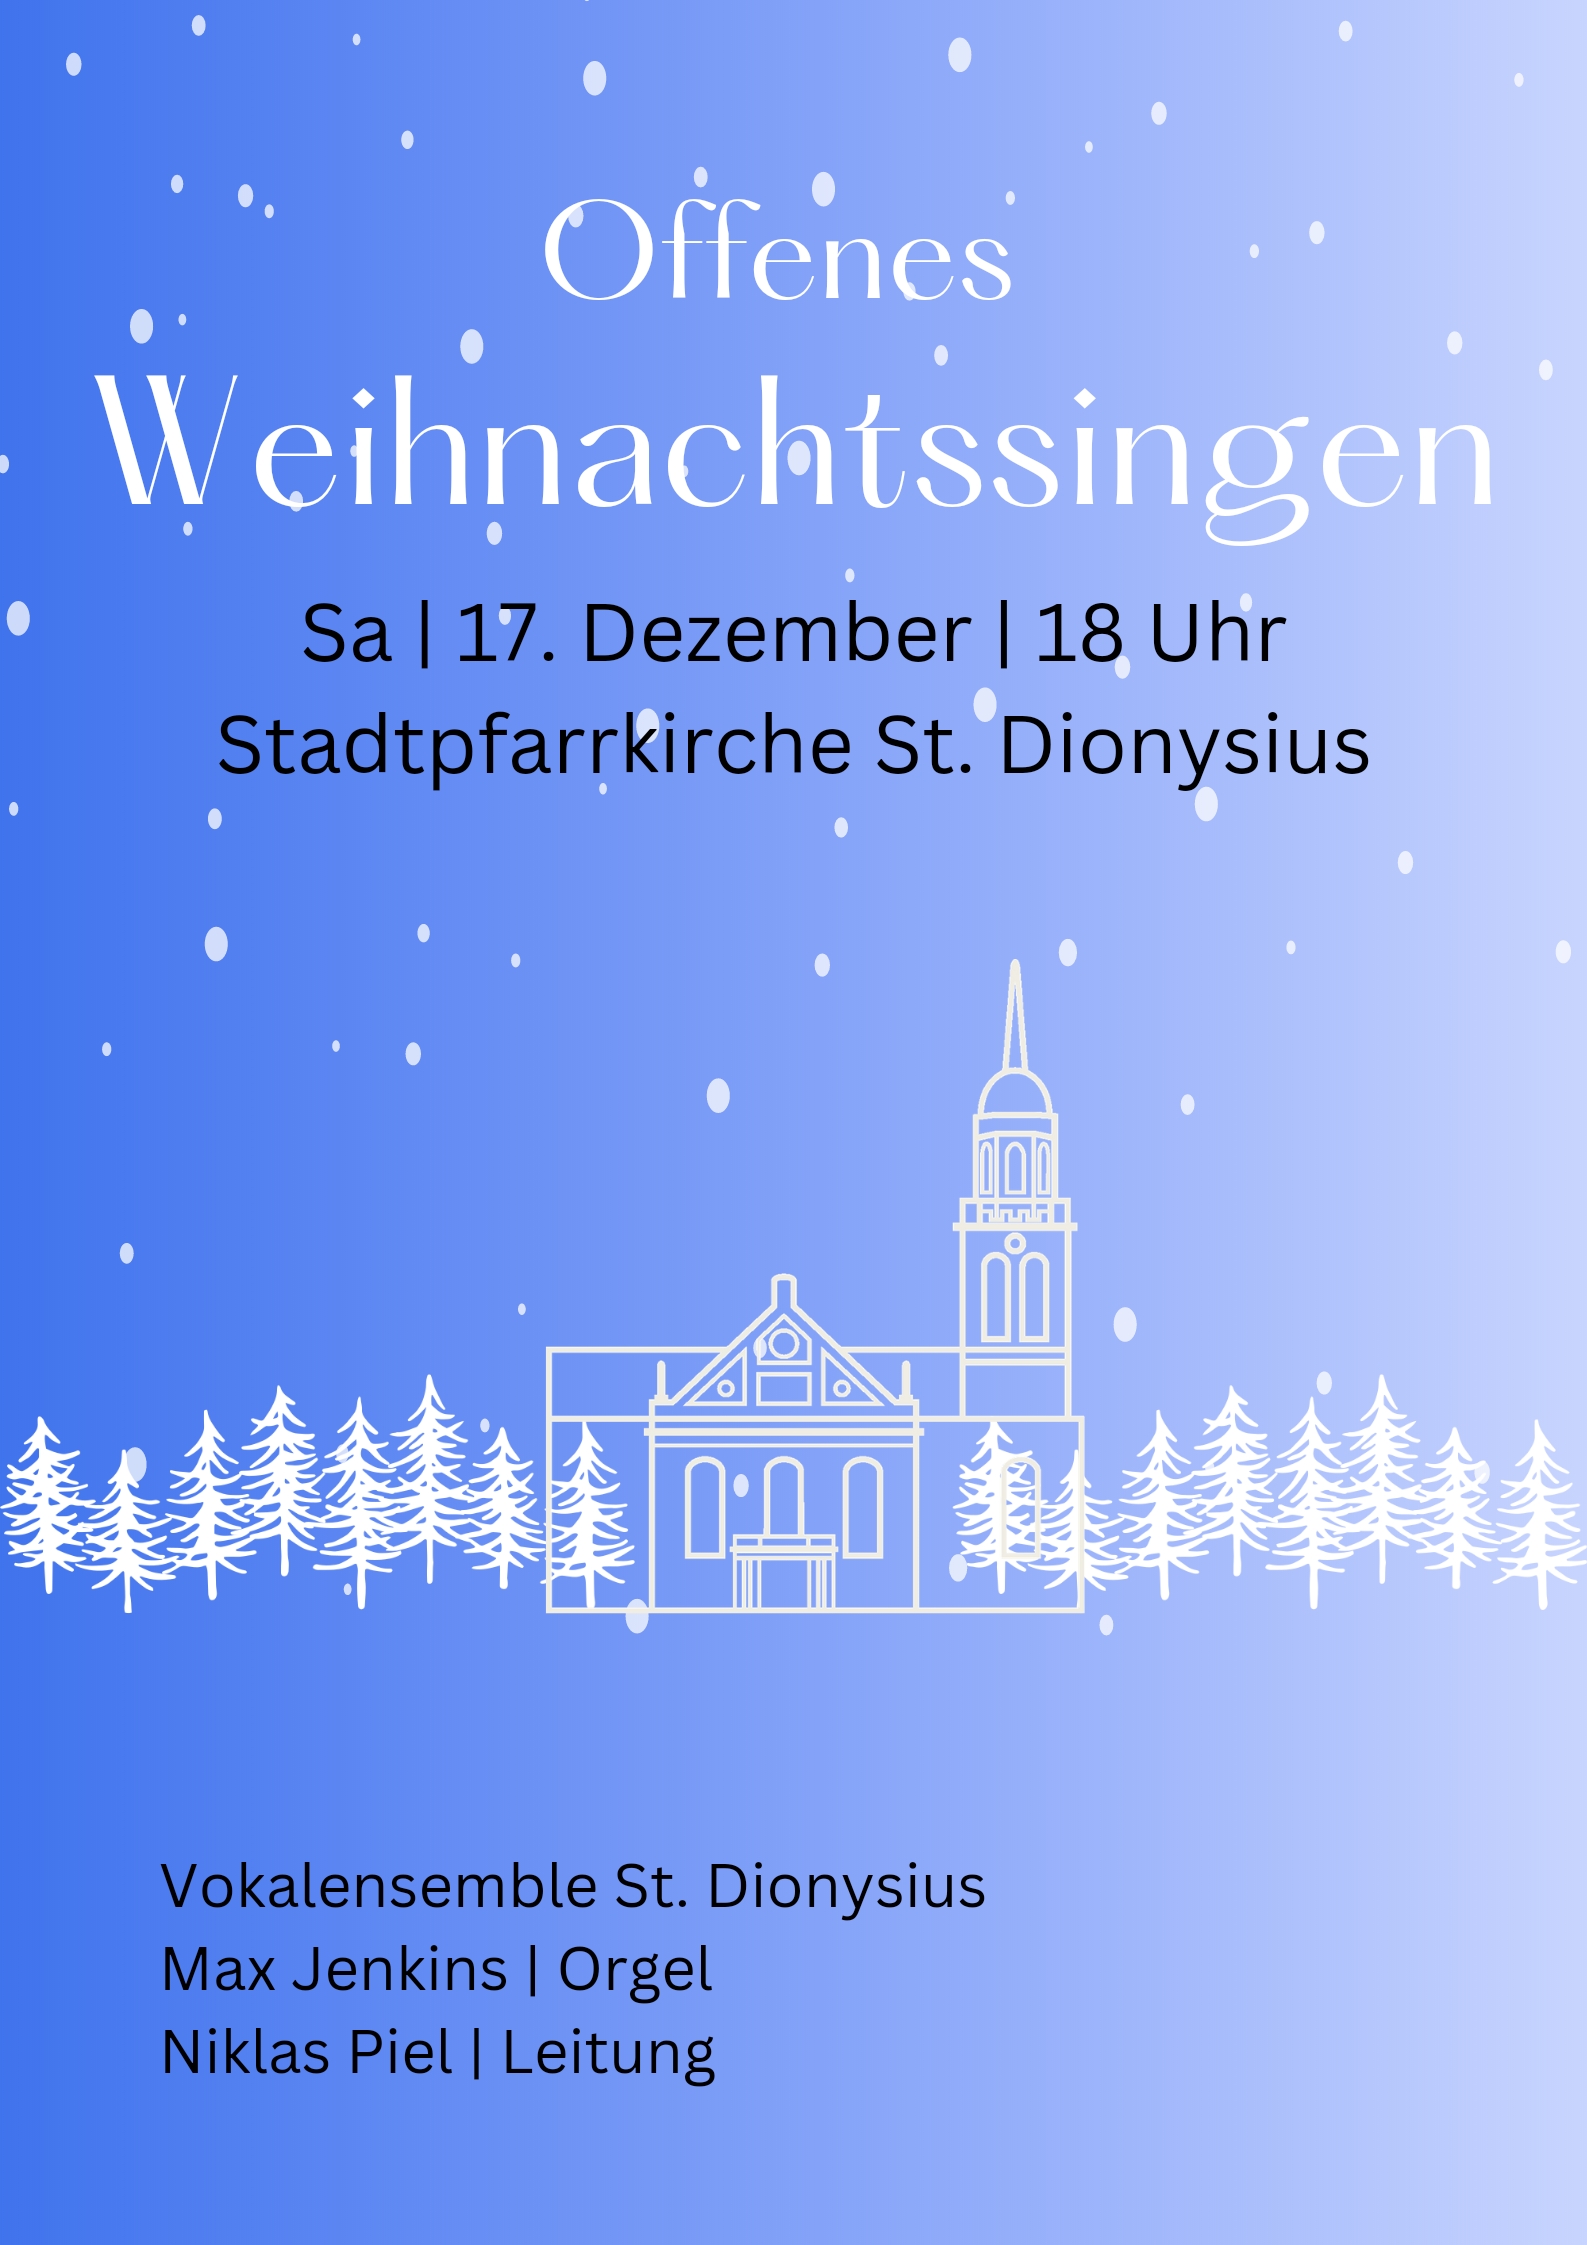 17.12.22 Weihnachtssingen Plakat (c) NP